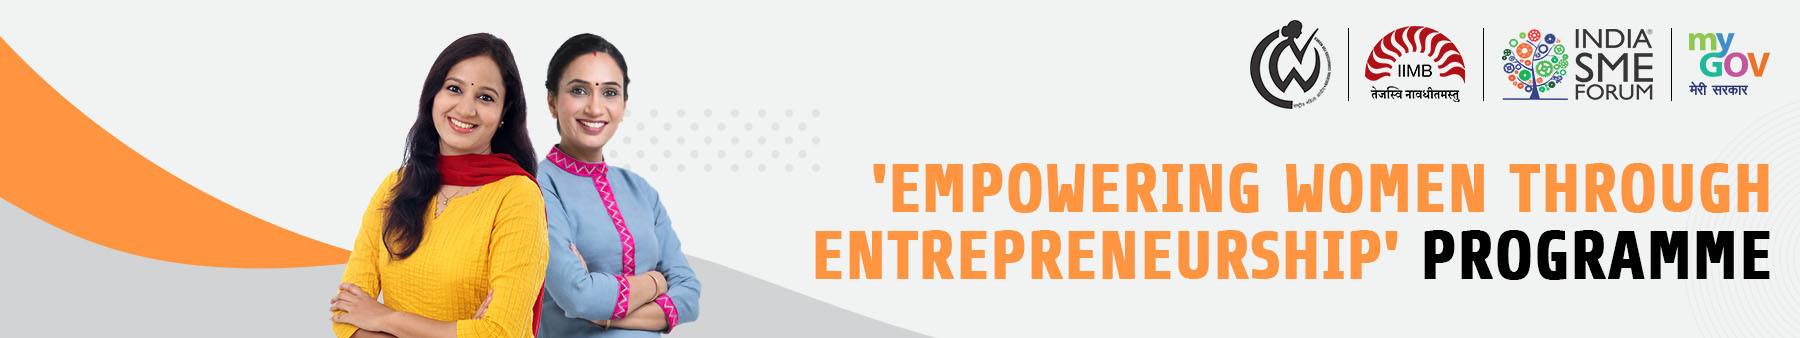 Empowering Women Through Entrepreneurship Programme 